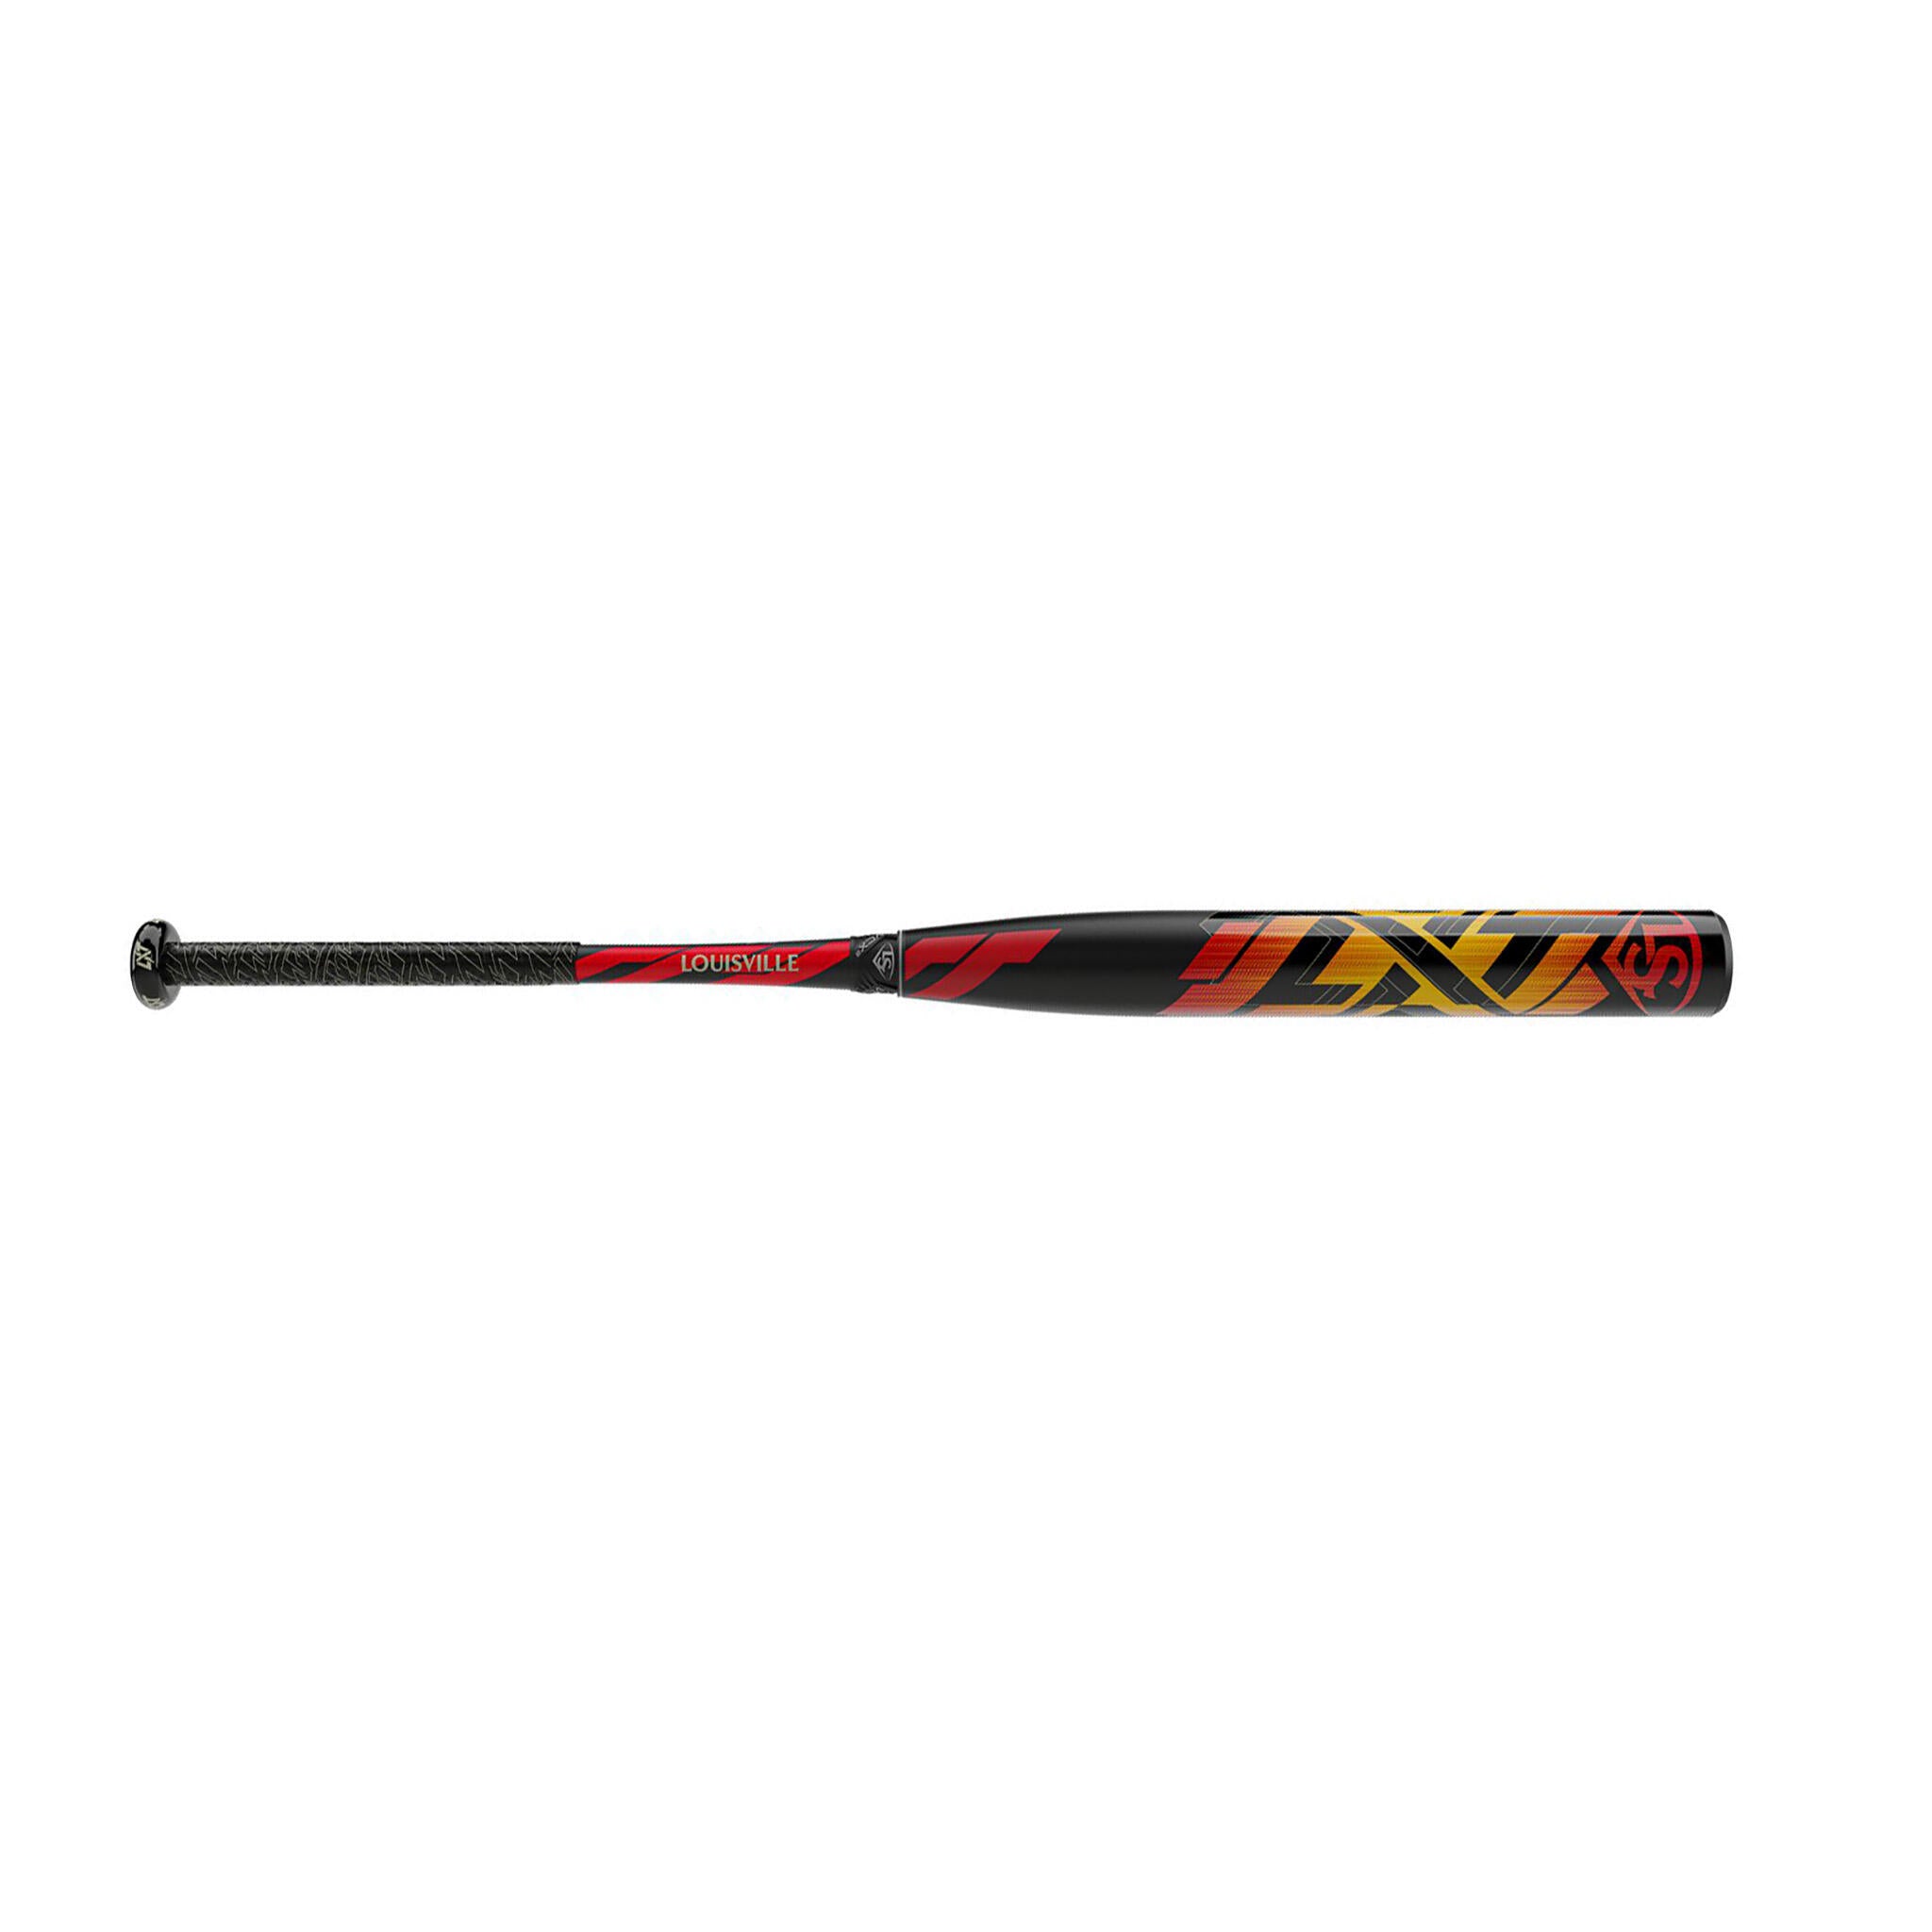 louisville slugger lxt fastpitch softball bat red and black